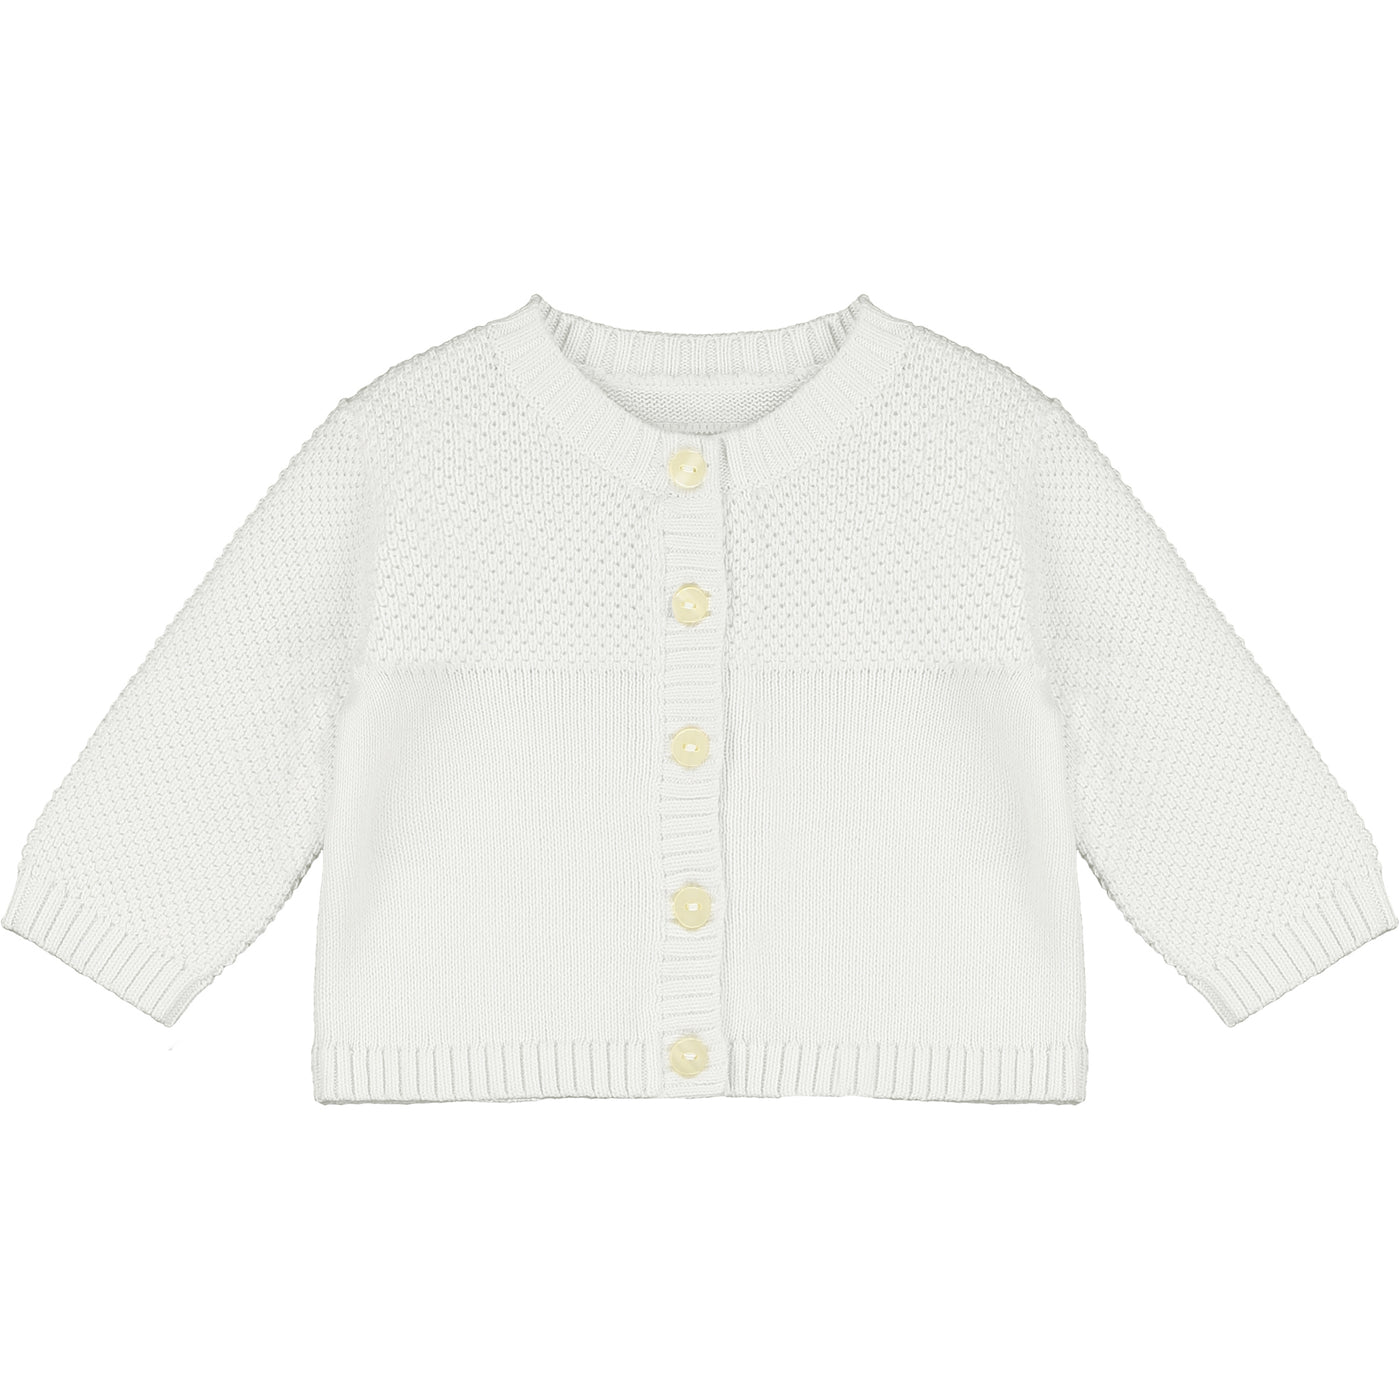 Cypress White Knit Baby Cardigan